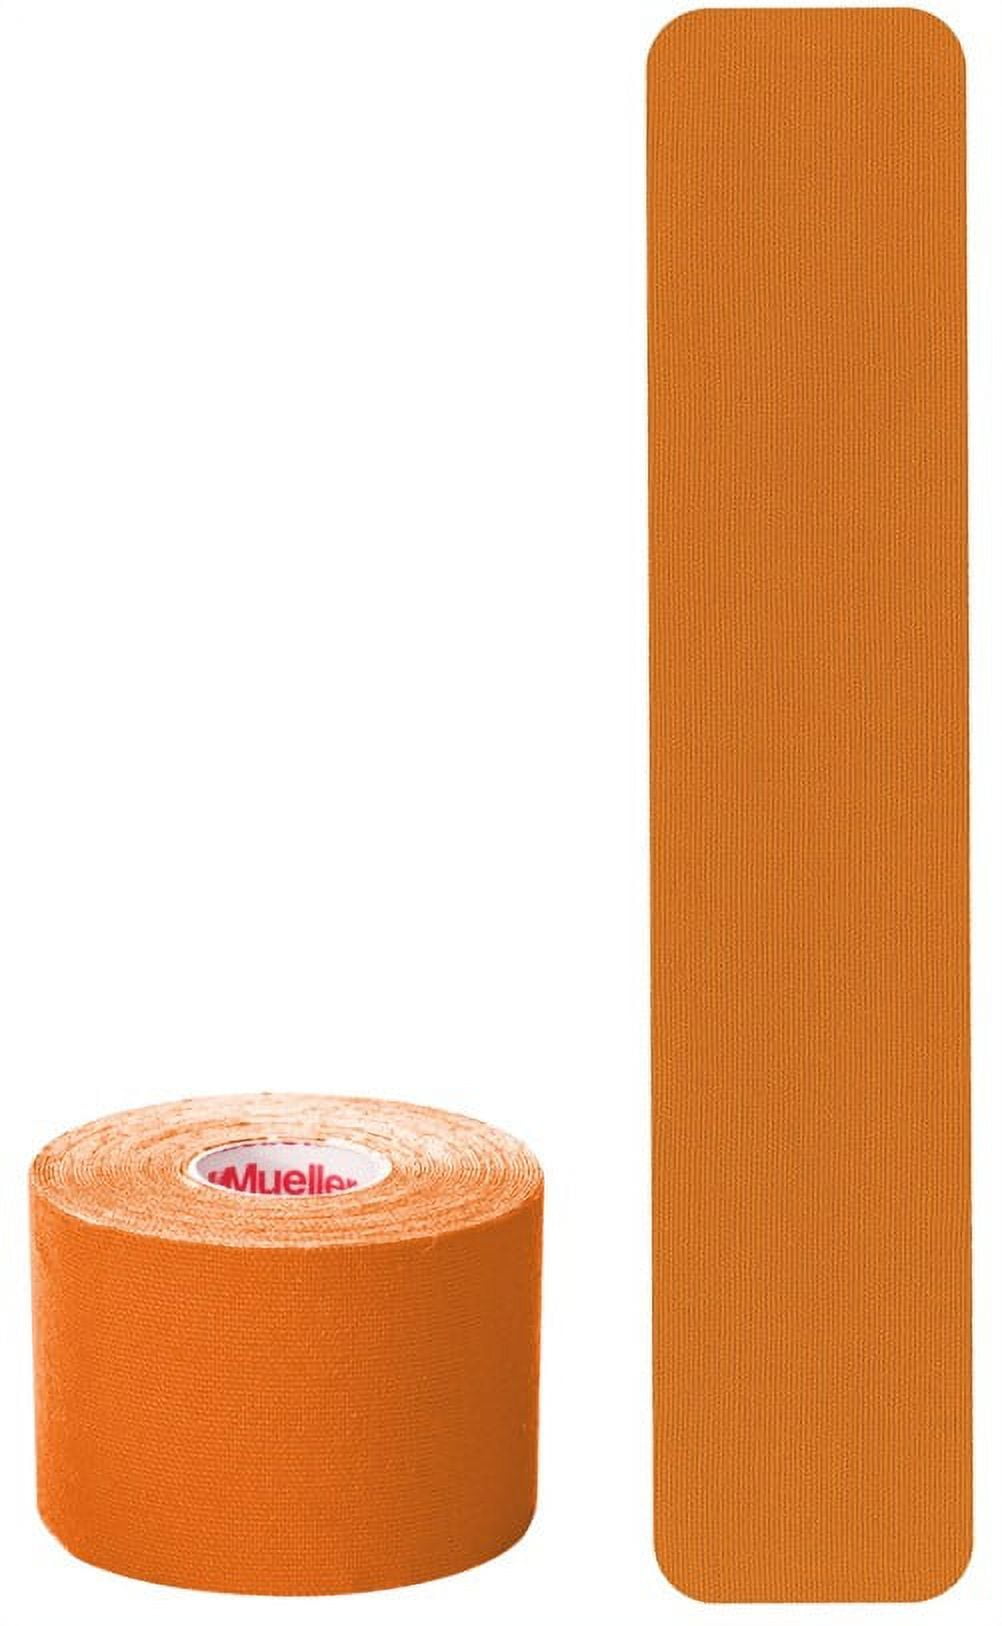 Vive Kinesiology Tape Roll - Kt Tape Precut Strips (2 x 16 Feet/20